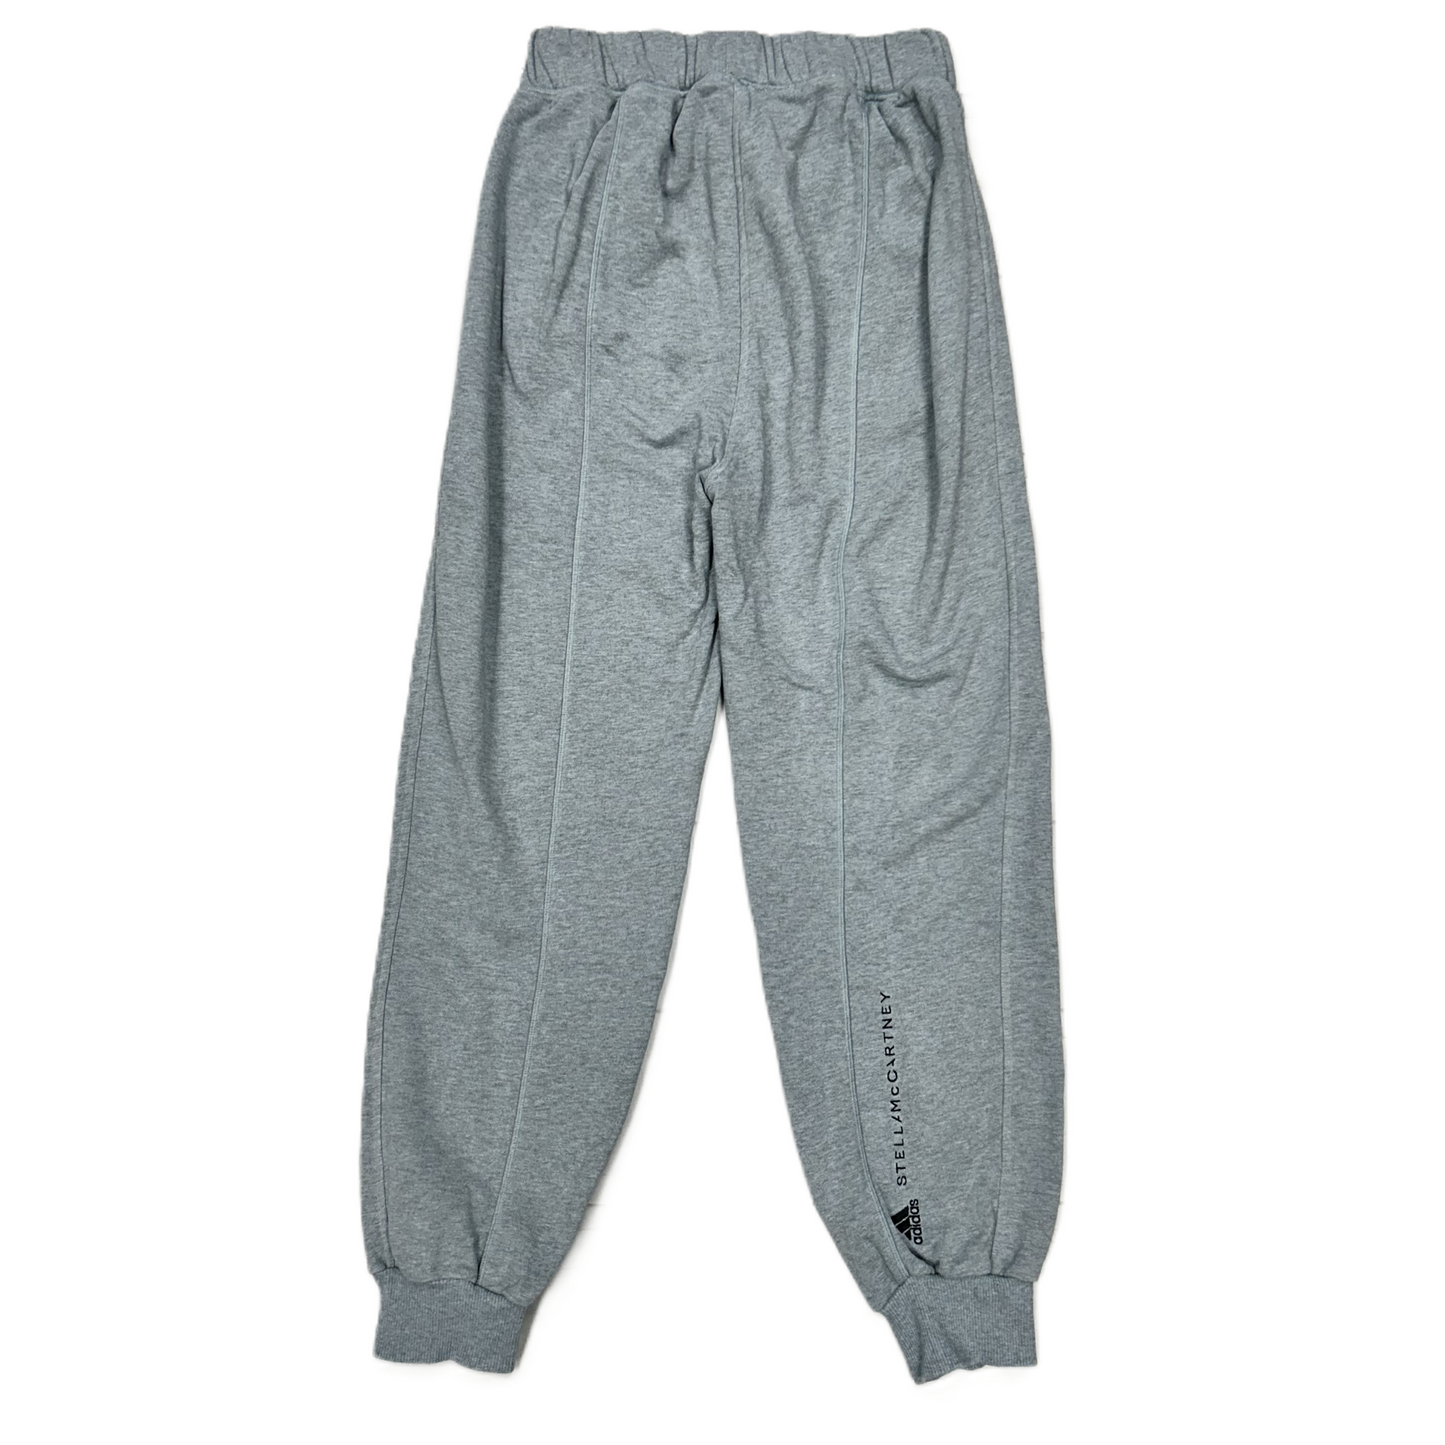 Athletic Pants By Stella Mccartney  Size: S